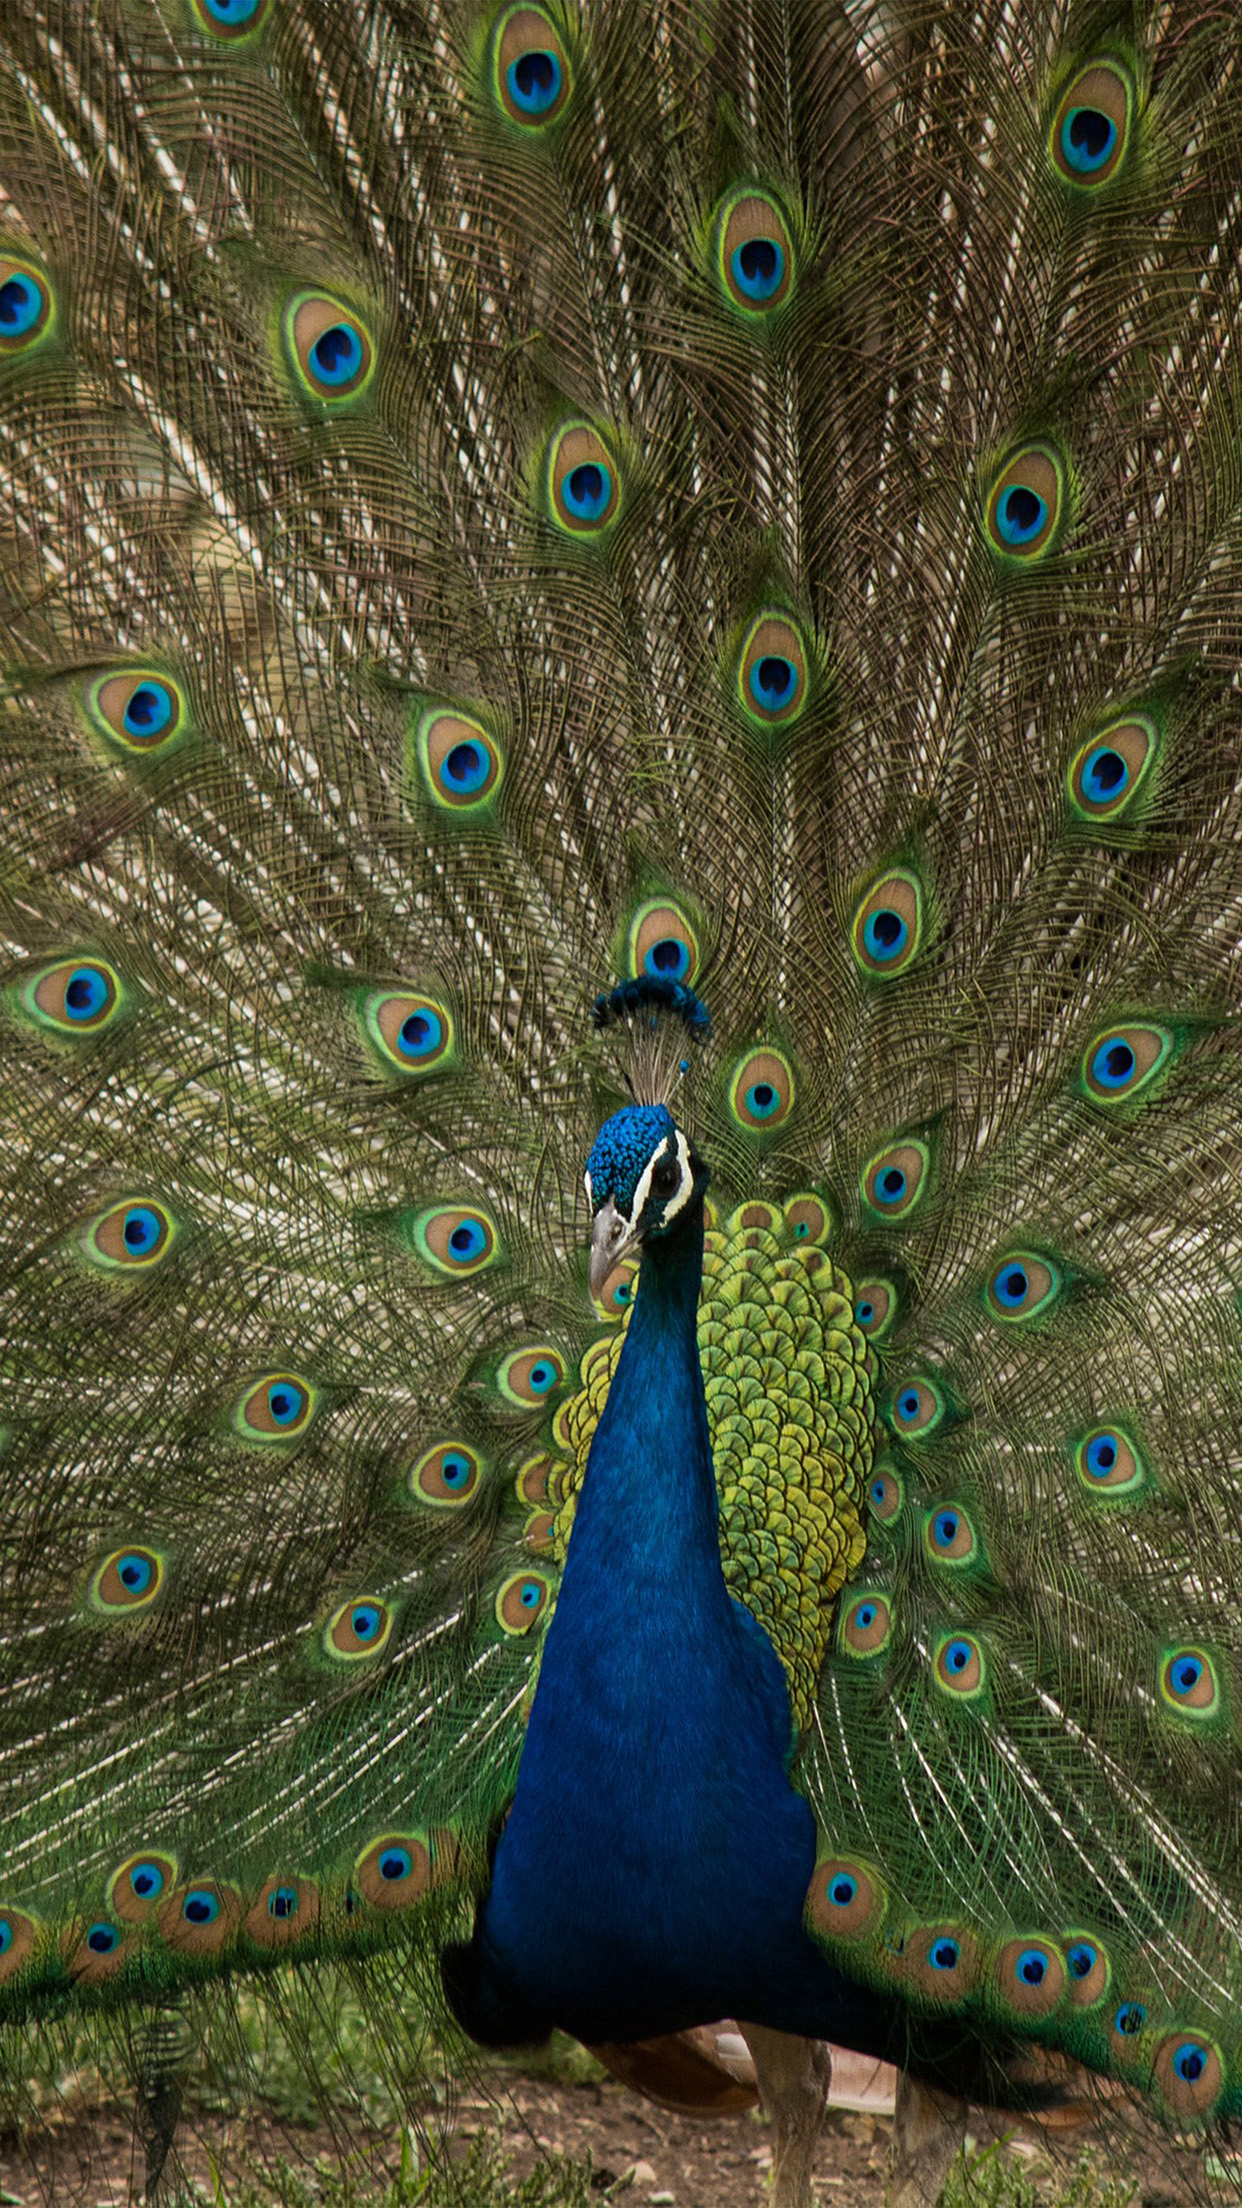 Peacock Animal Beautiful Nature Android wallpaper